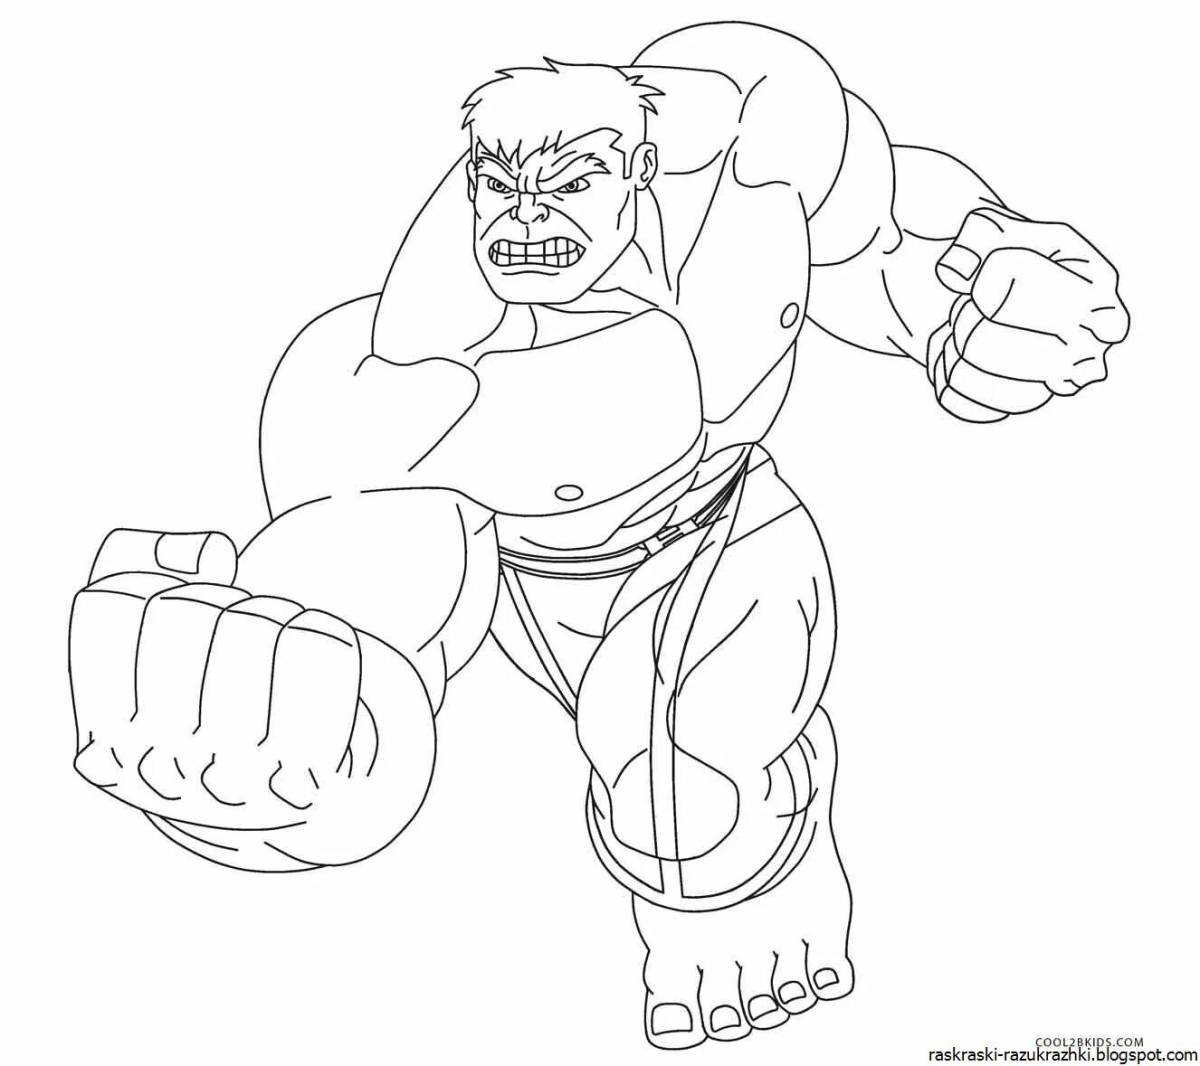 Unique iron hulk coloring page